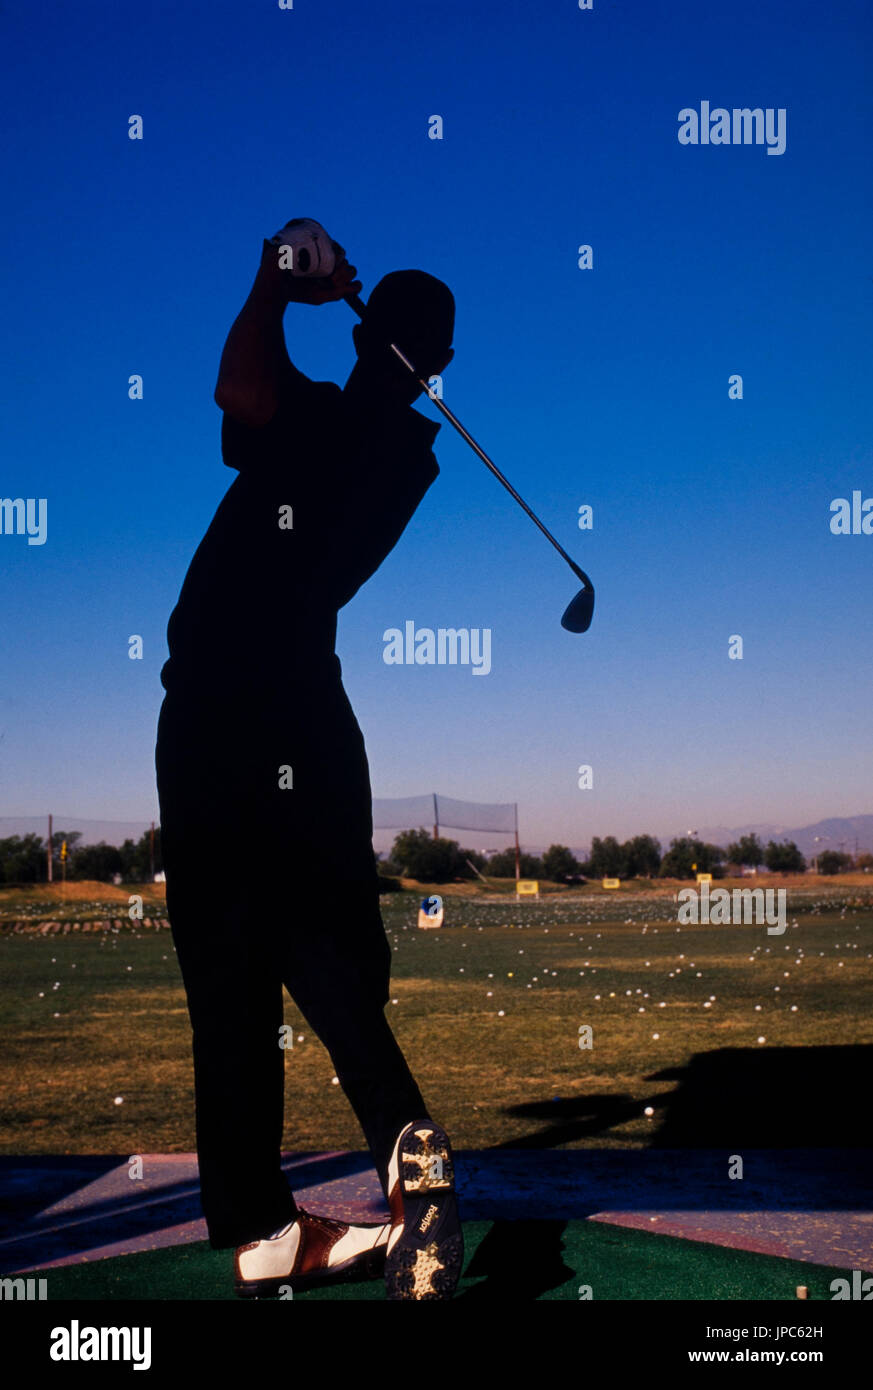 Un hombre es golfista siluetas contra un cielo azul profundo. Foto de stock